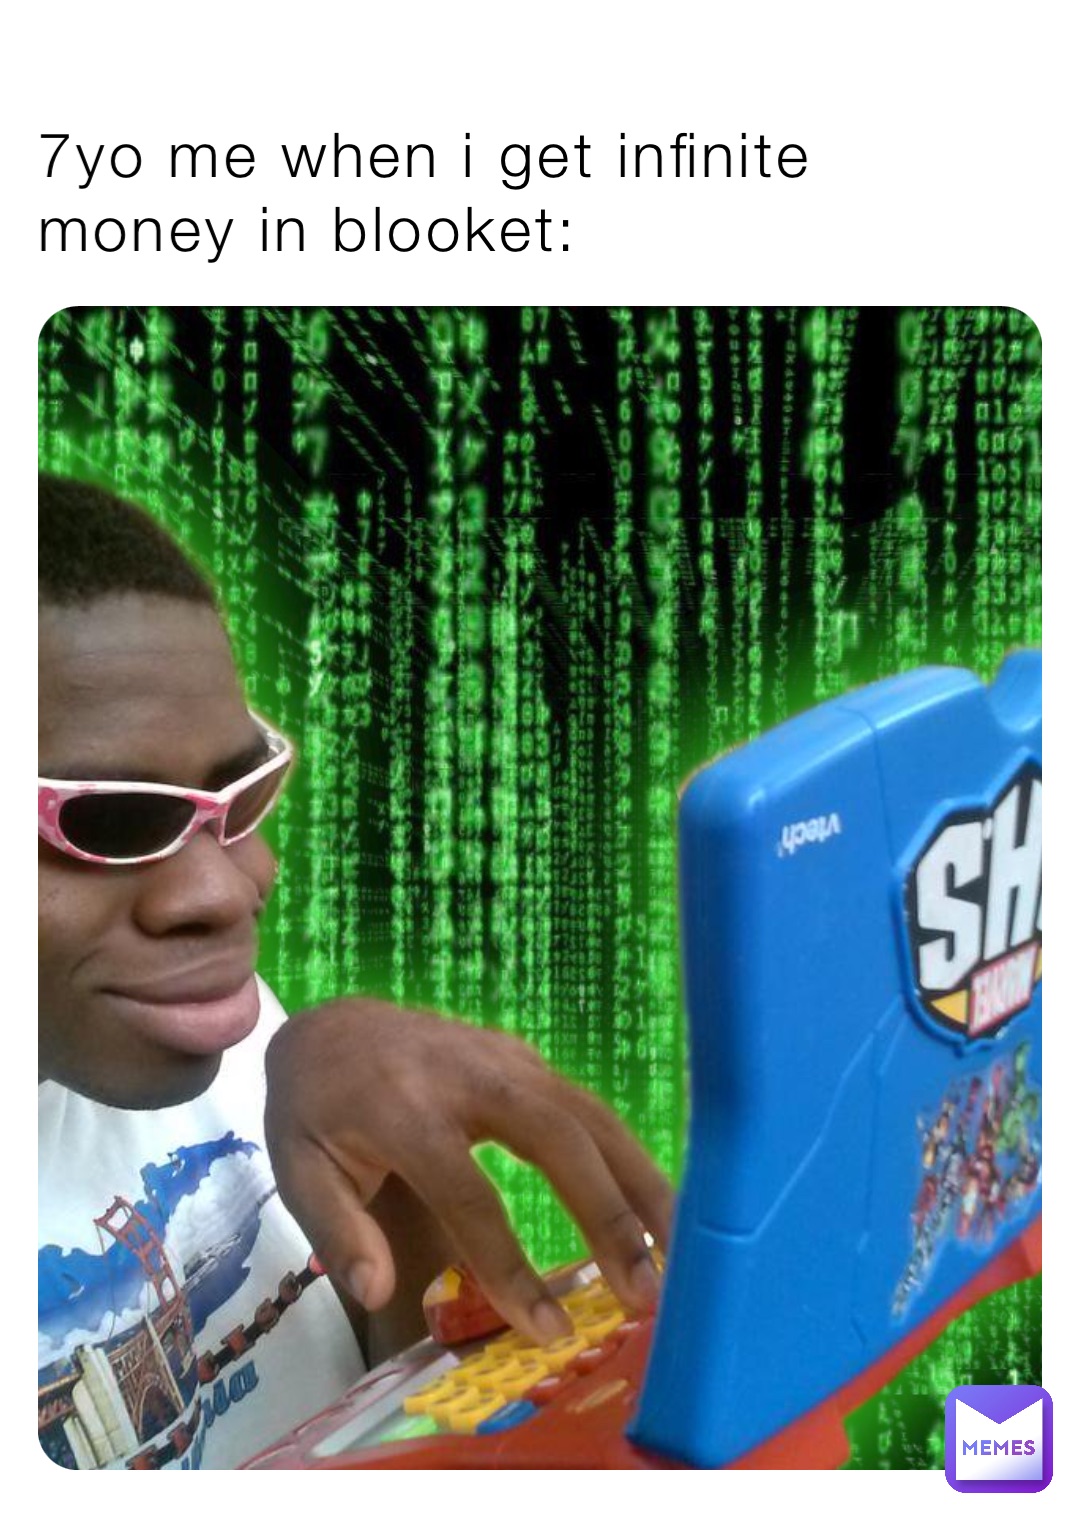 7yo me when i get infinite money in blooket Kevin_Nickel Memes